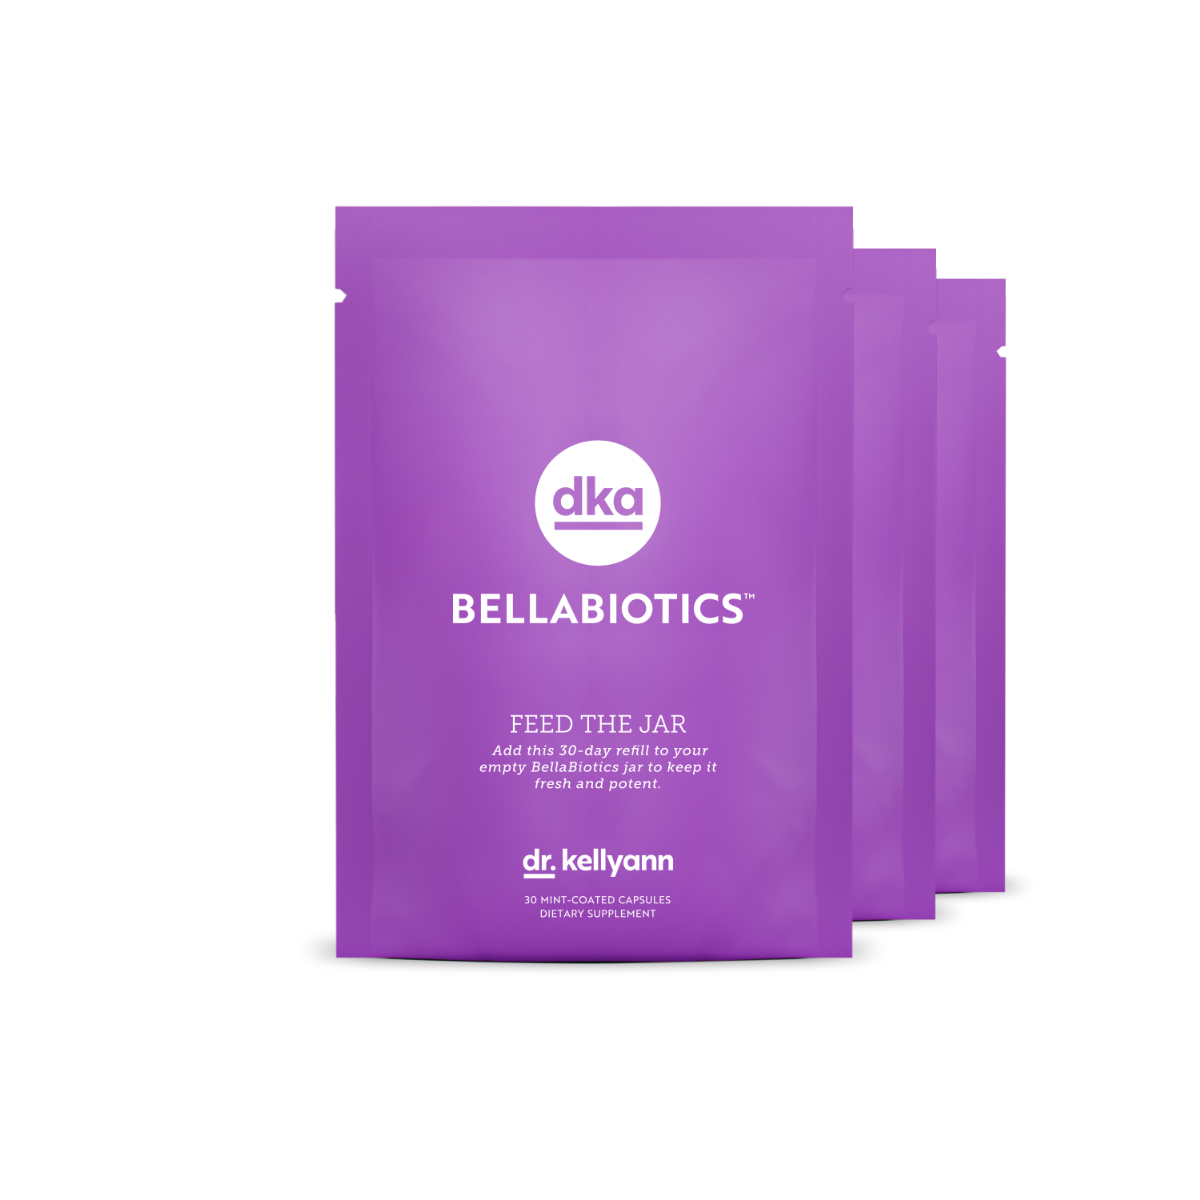 BellaBiotics Refills + Reorders